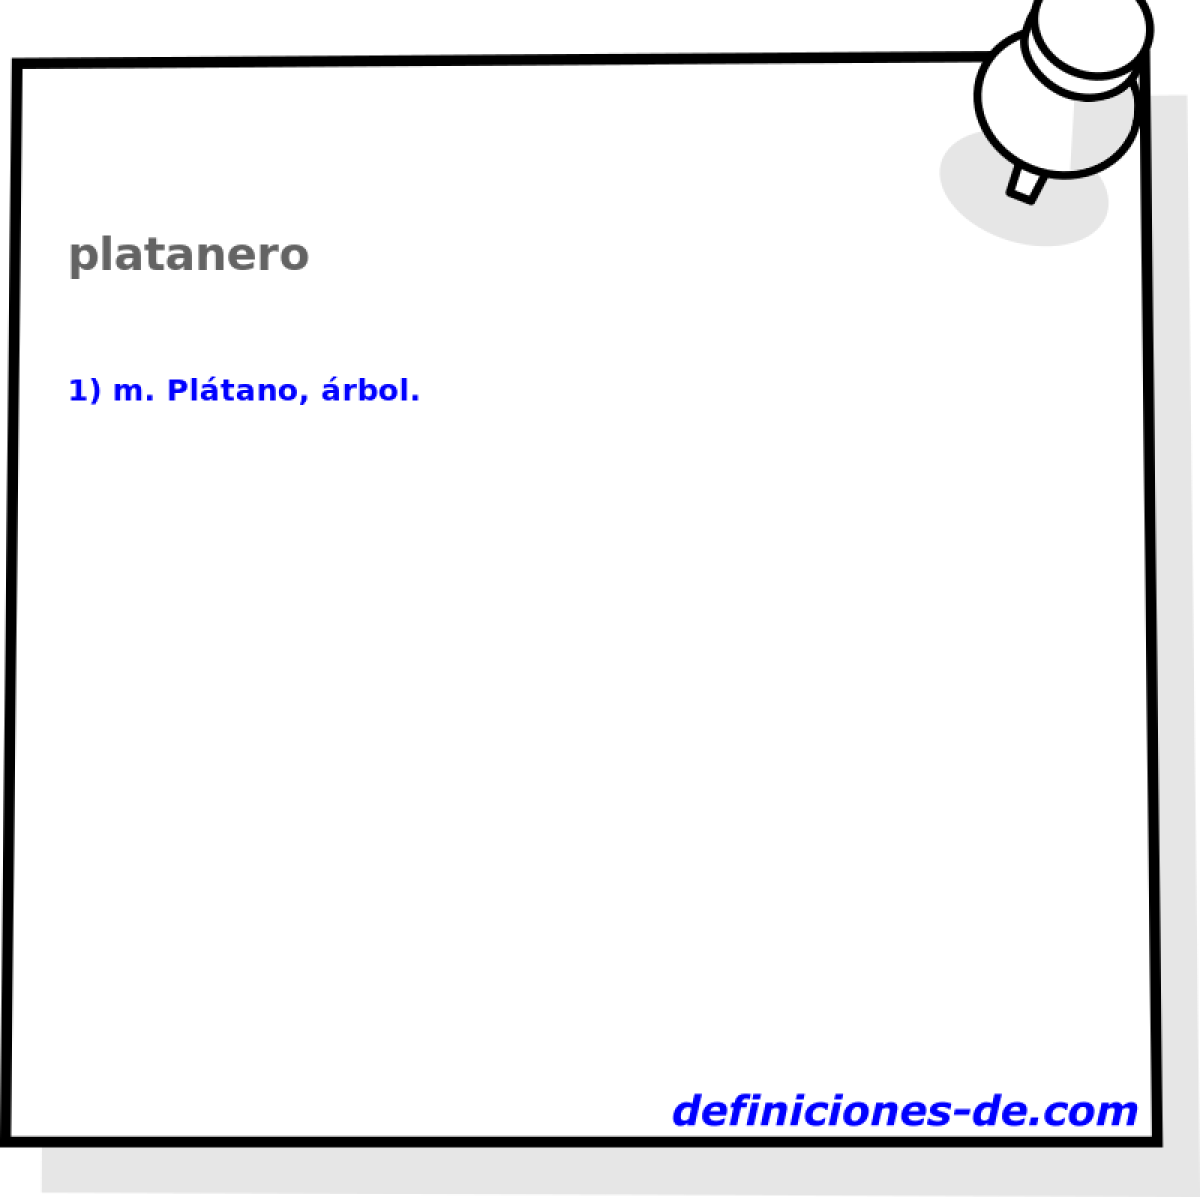 platanero 